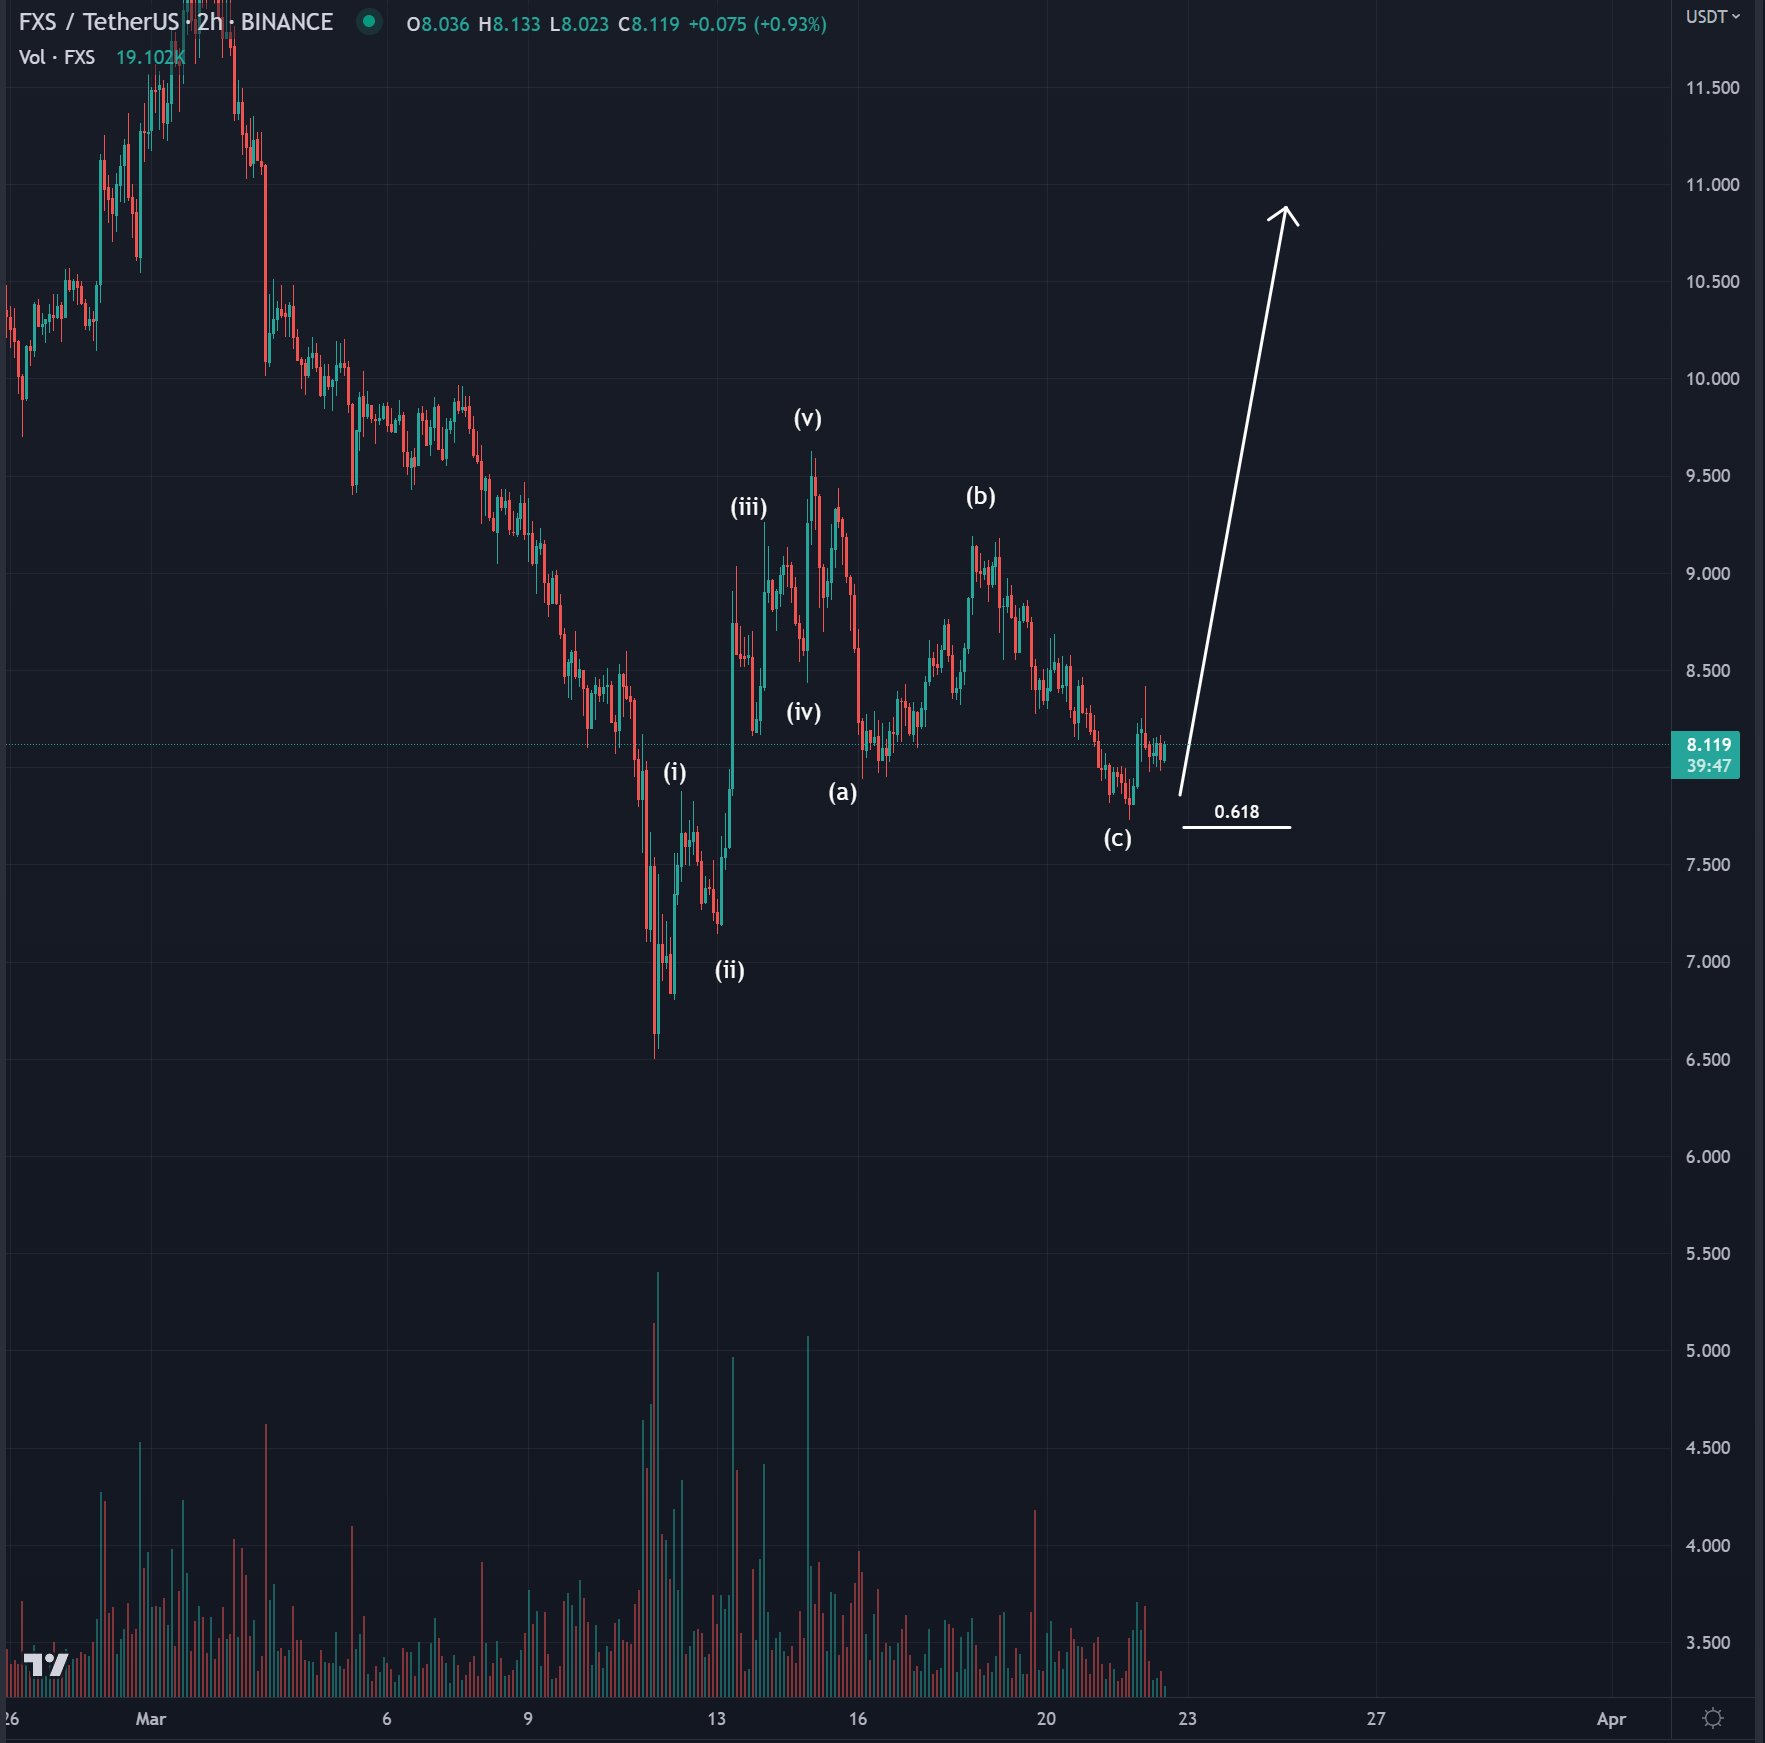 FXS/USDT price chart